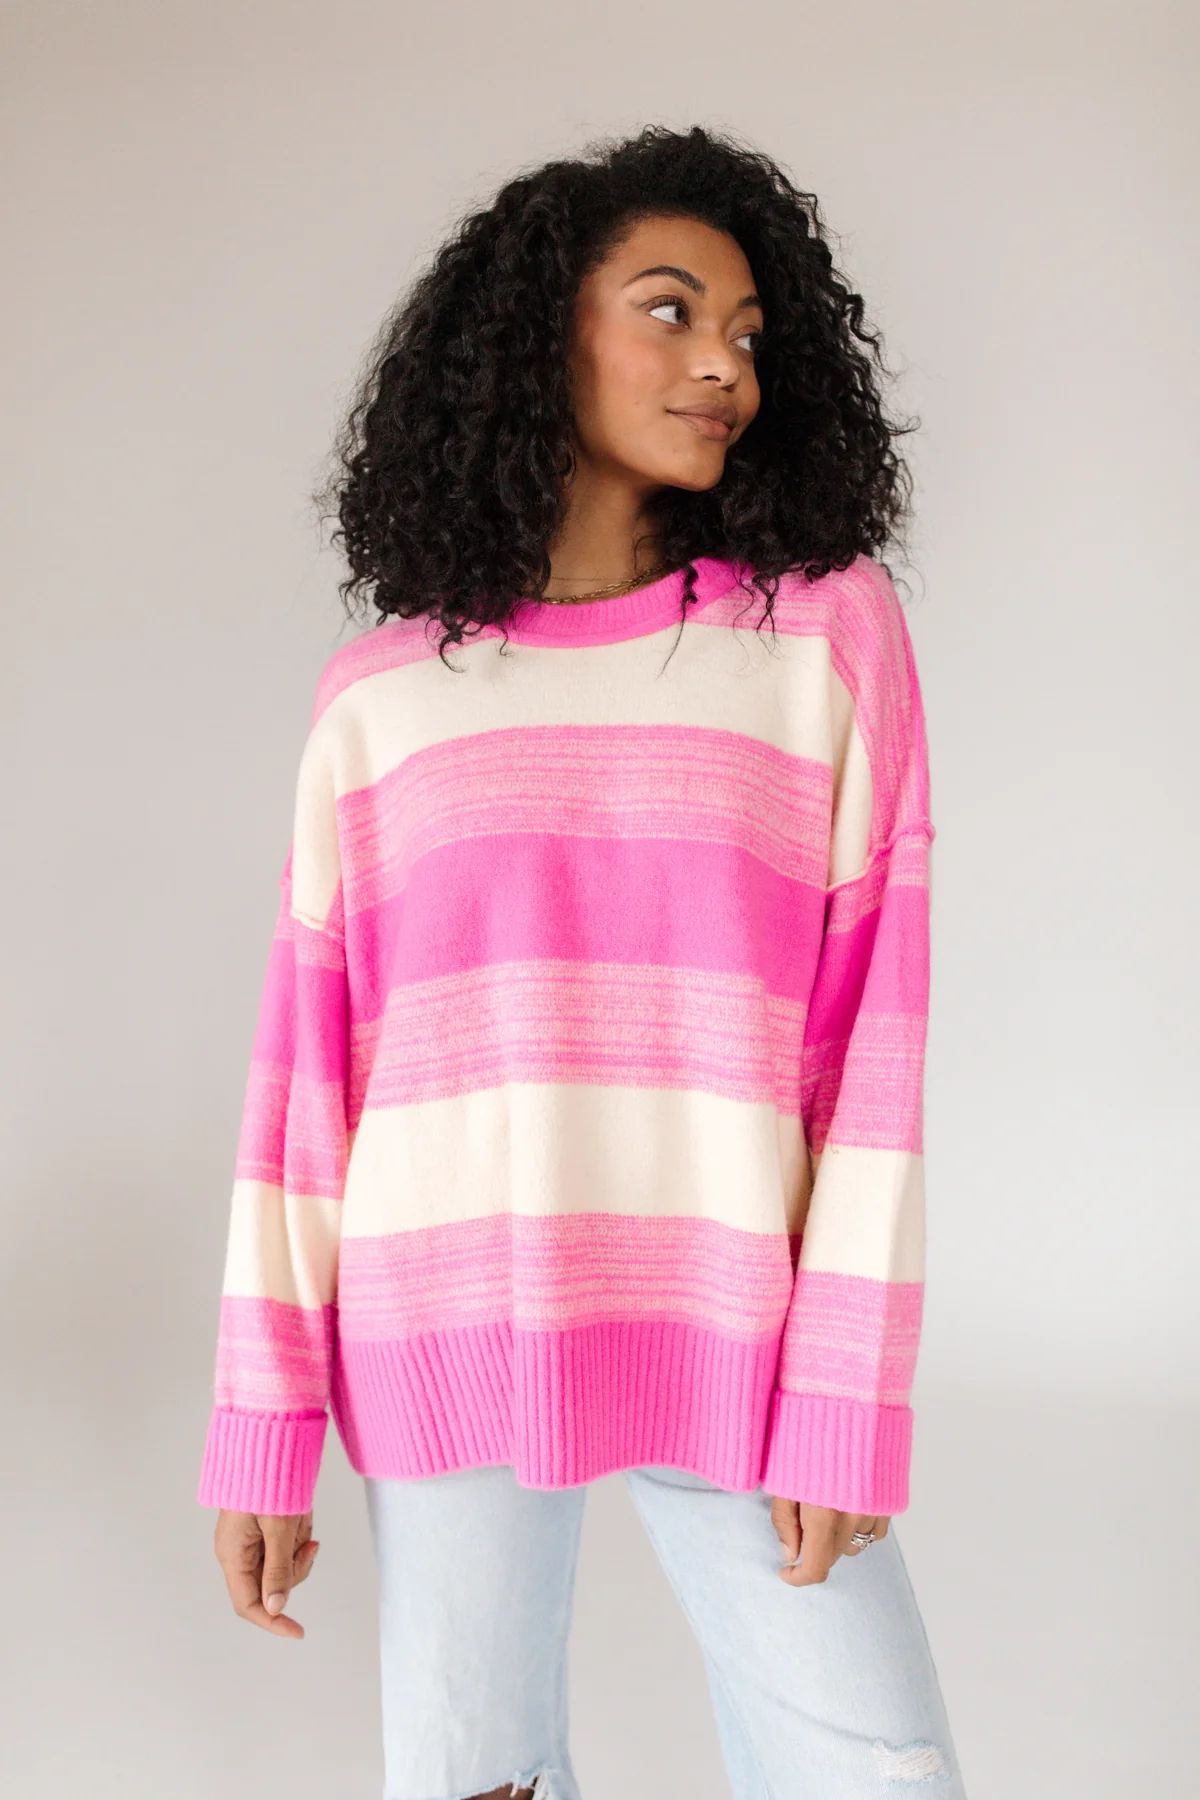 RESTOCK - Ellie Striped Sweater | The Post